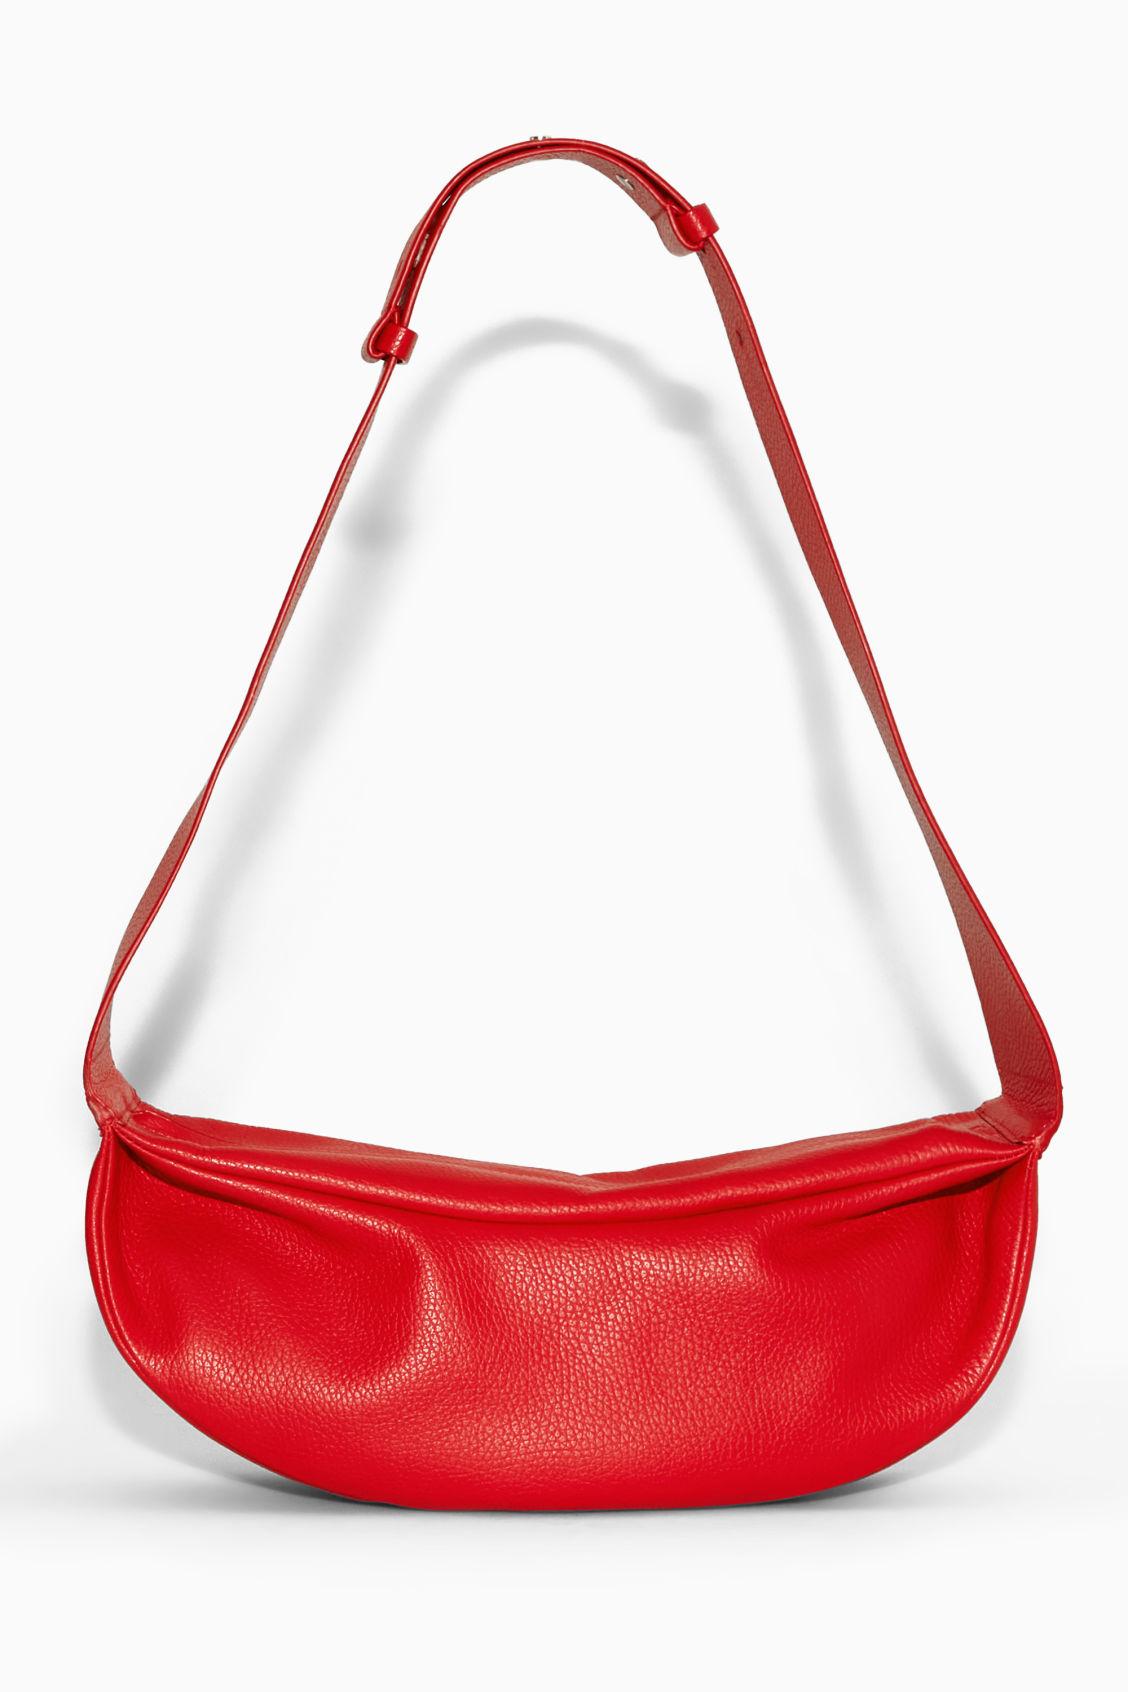 crossbody red bag